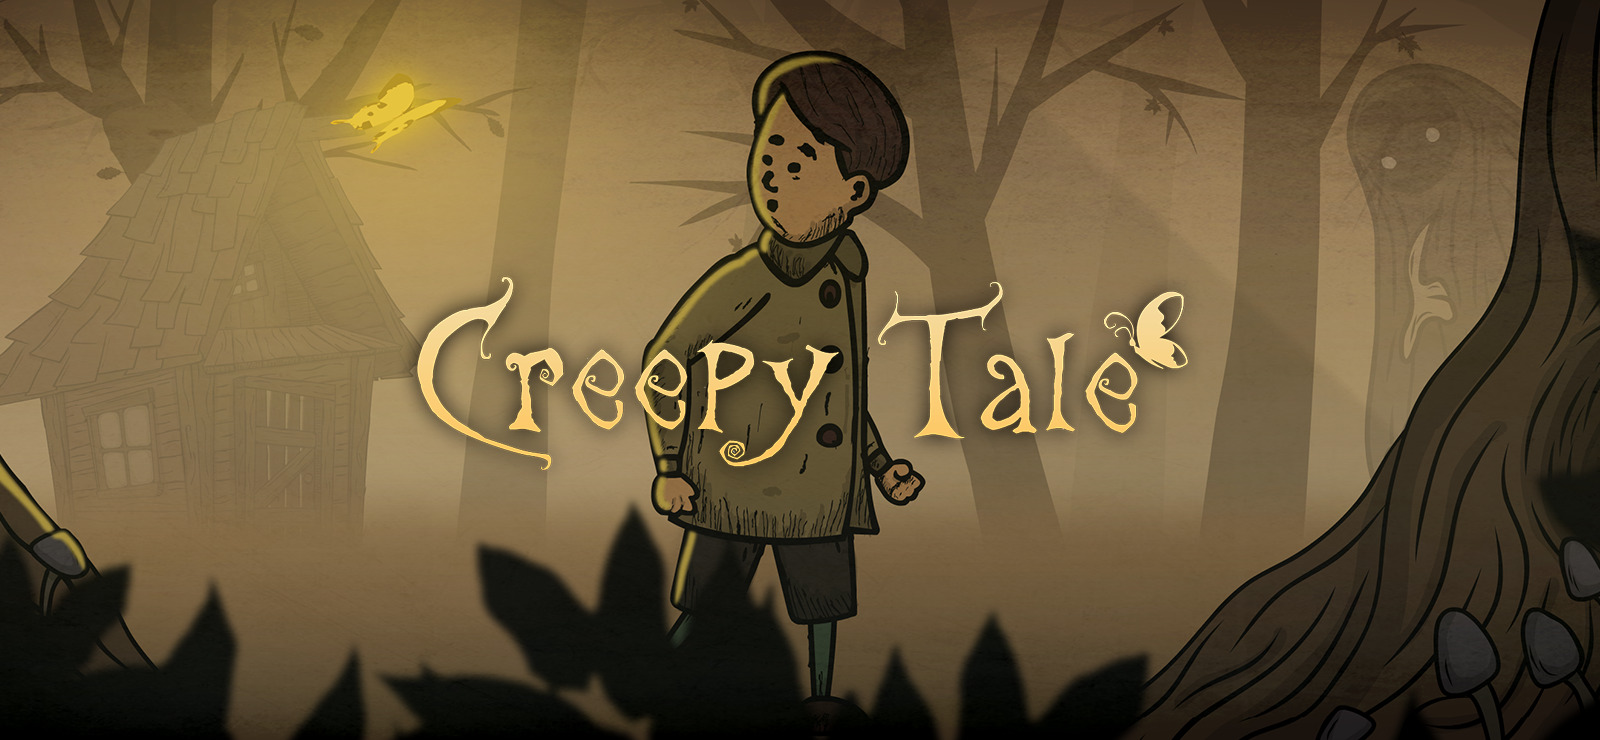 Creepy tale 4